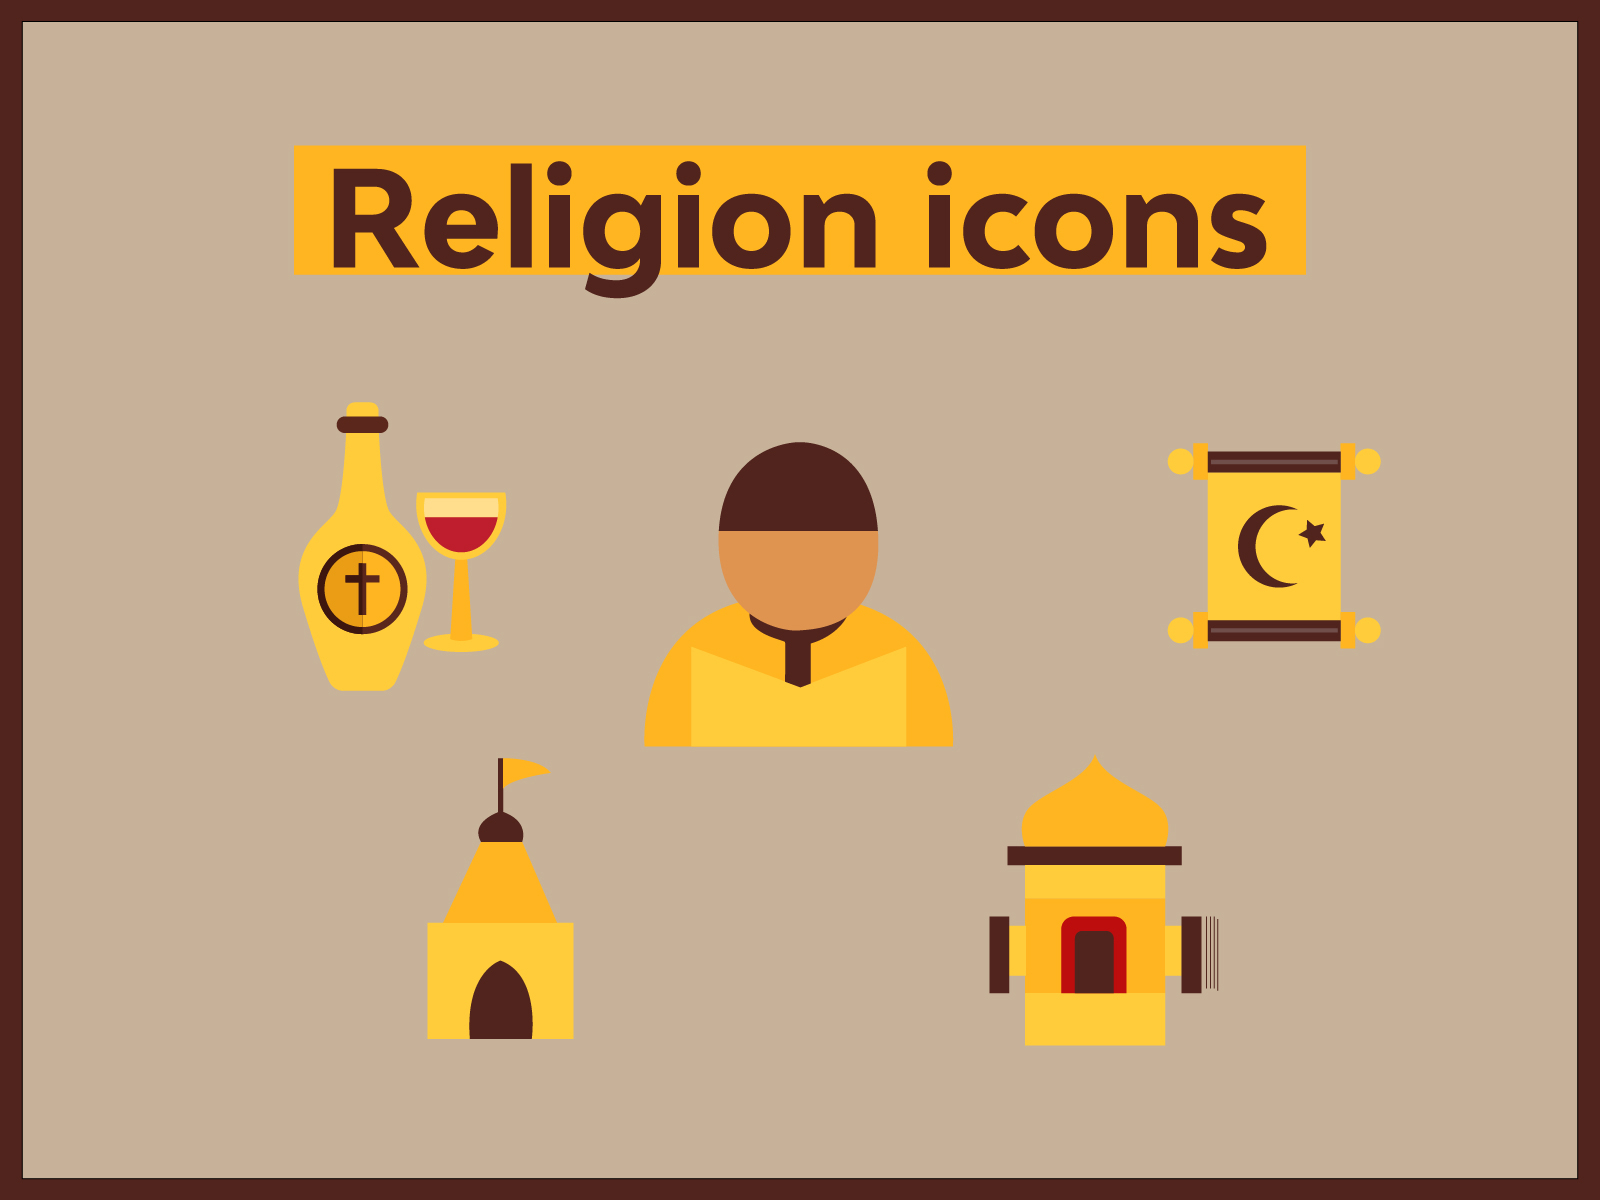 Icons Theme Religion 06 by Cantik Kreatif Kolaborasi on Dribbble